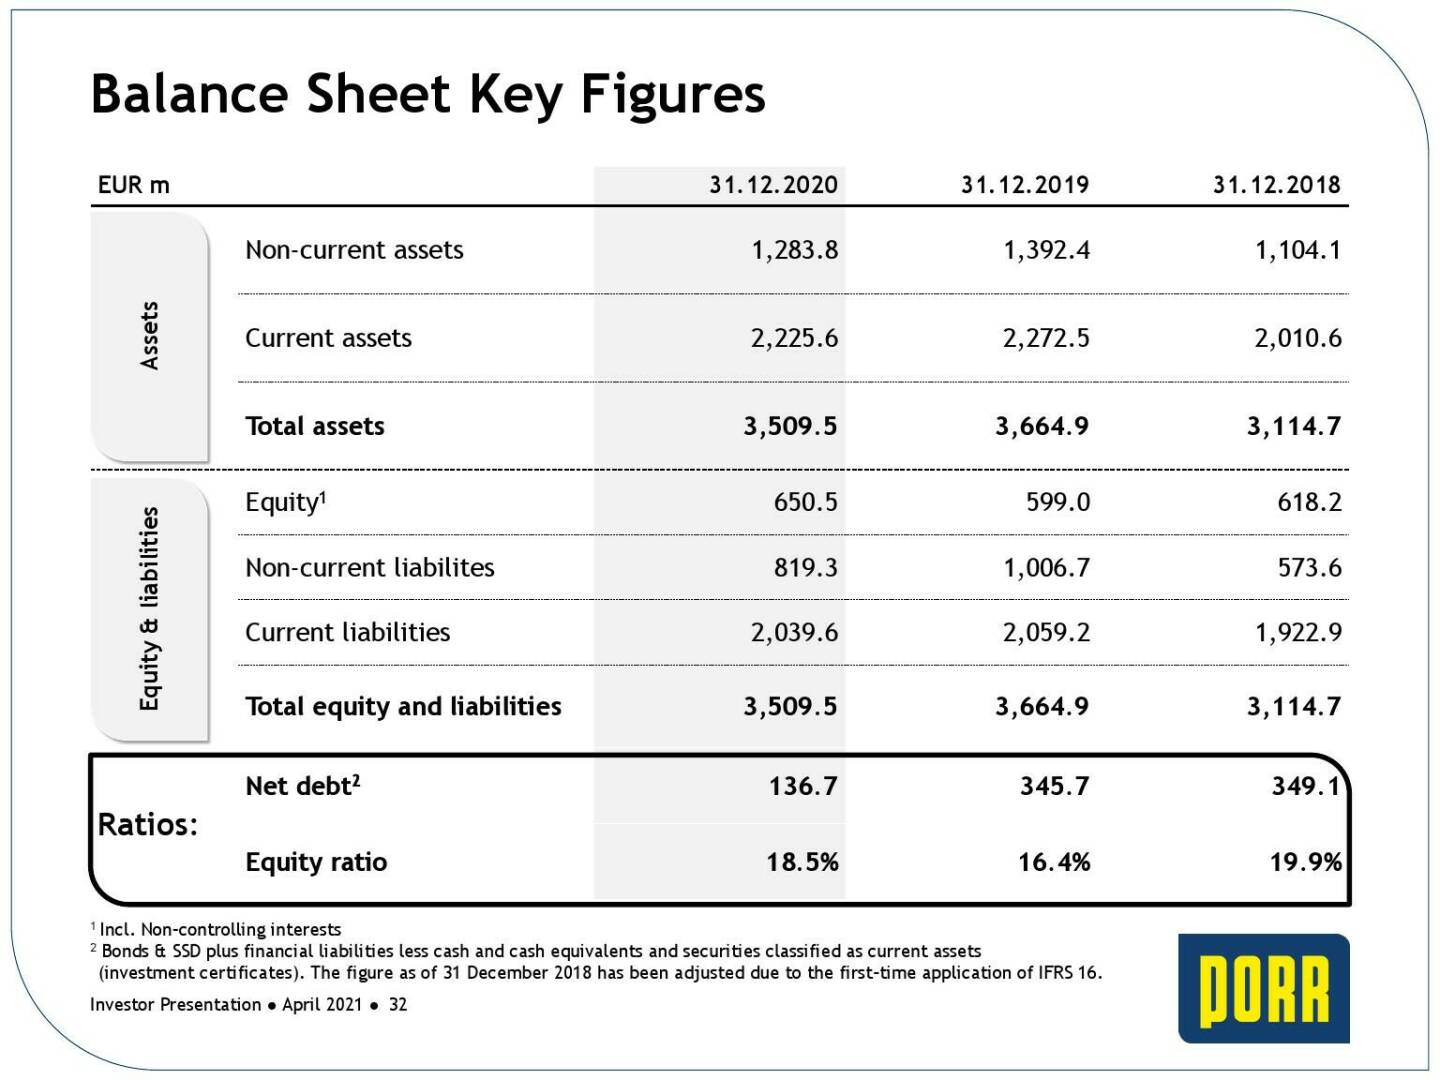 Porr - Balance sheet key figures